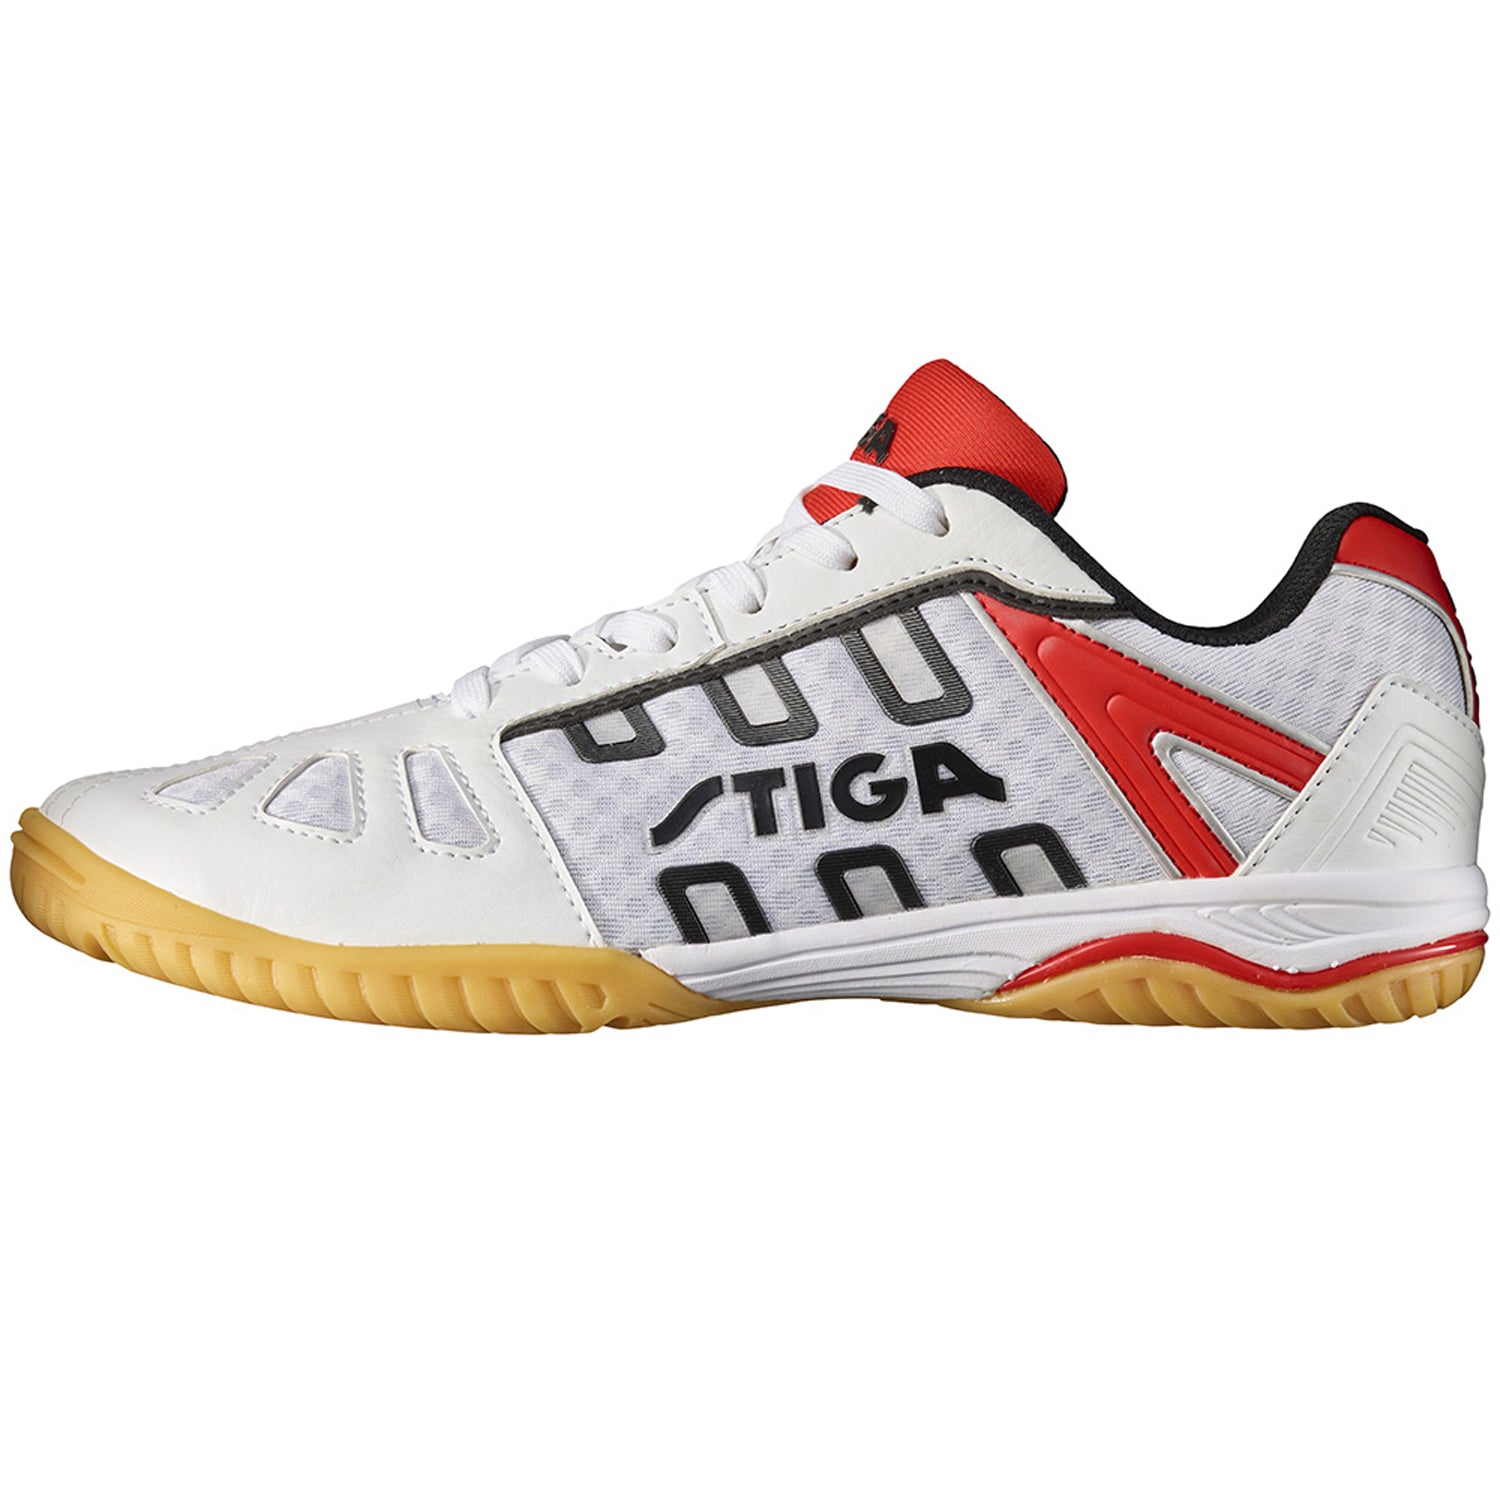 Stiga Liner-II Professional Table Tennis Shoes